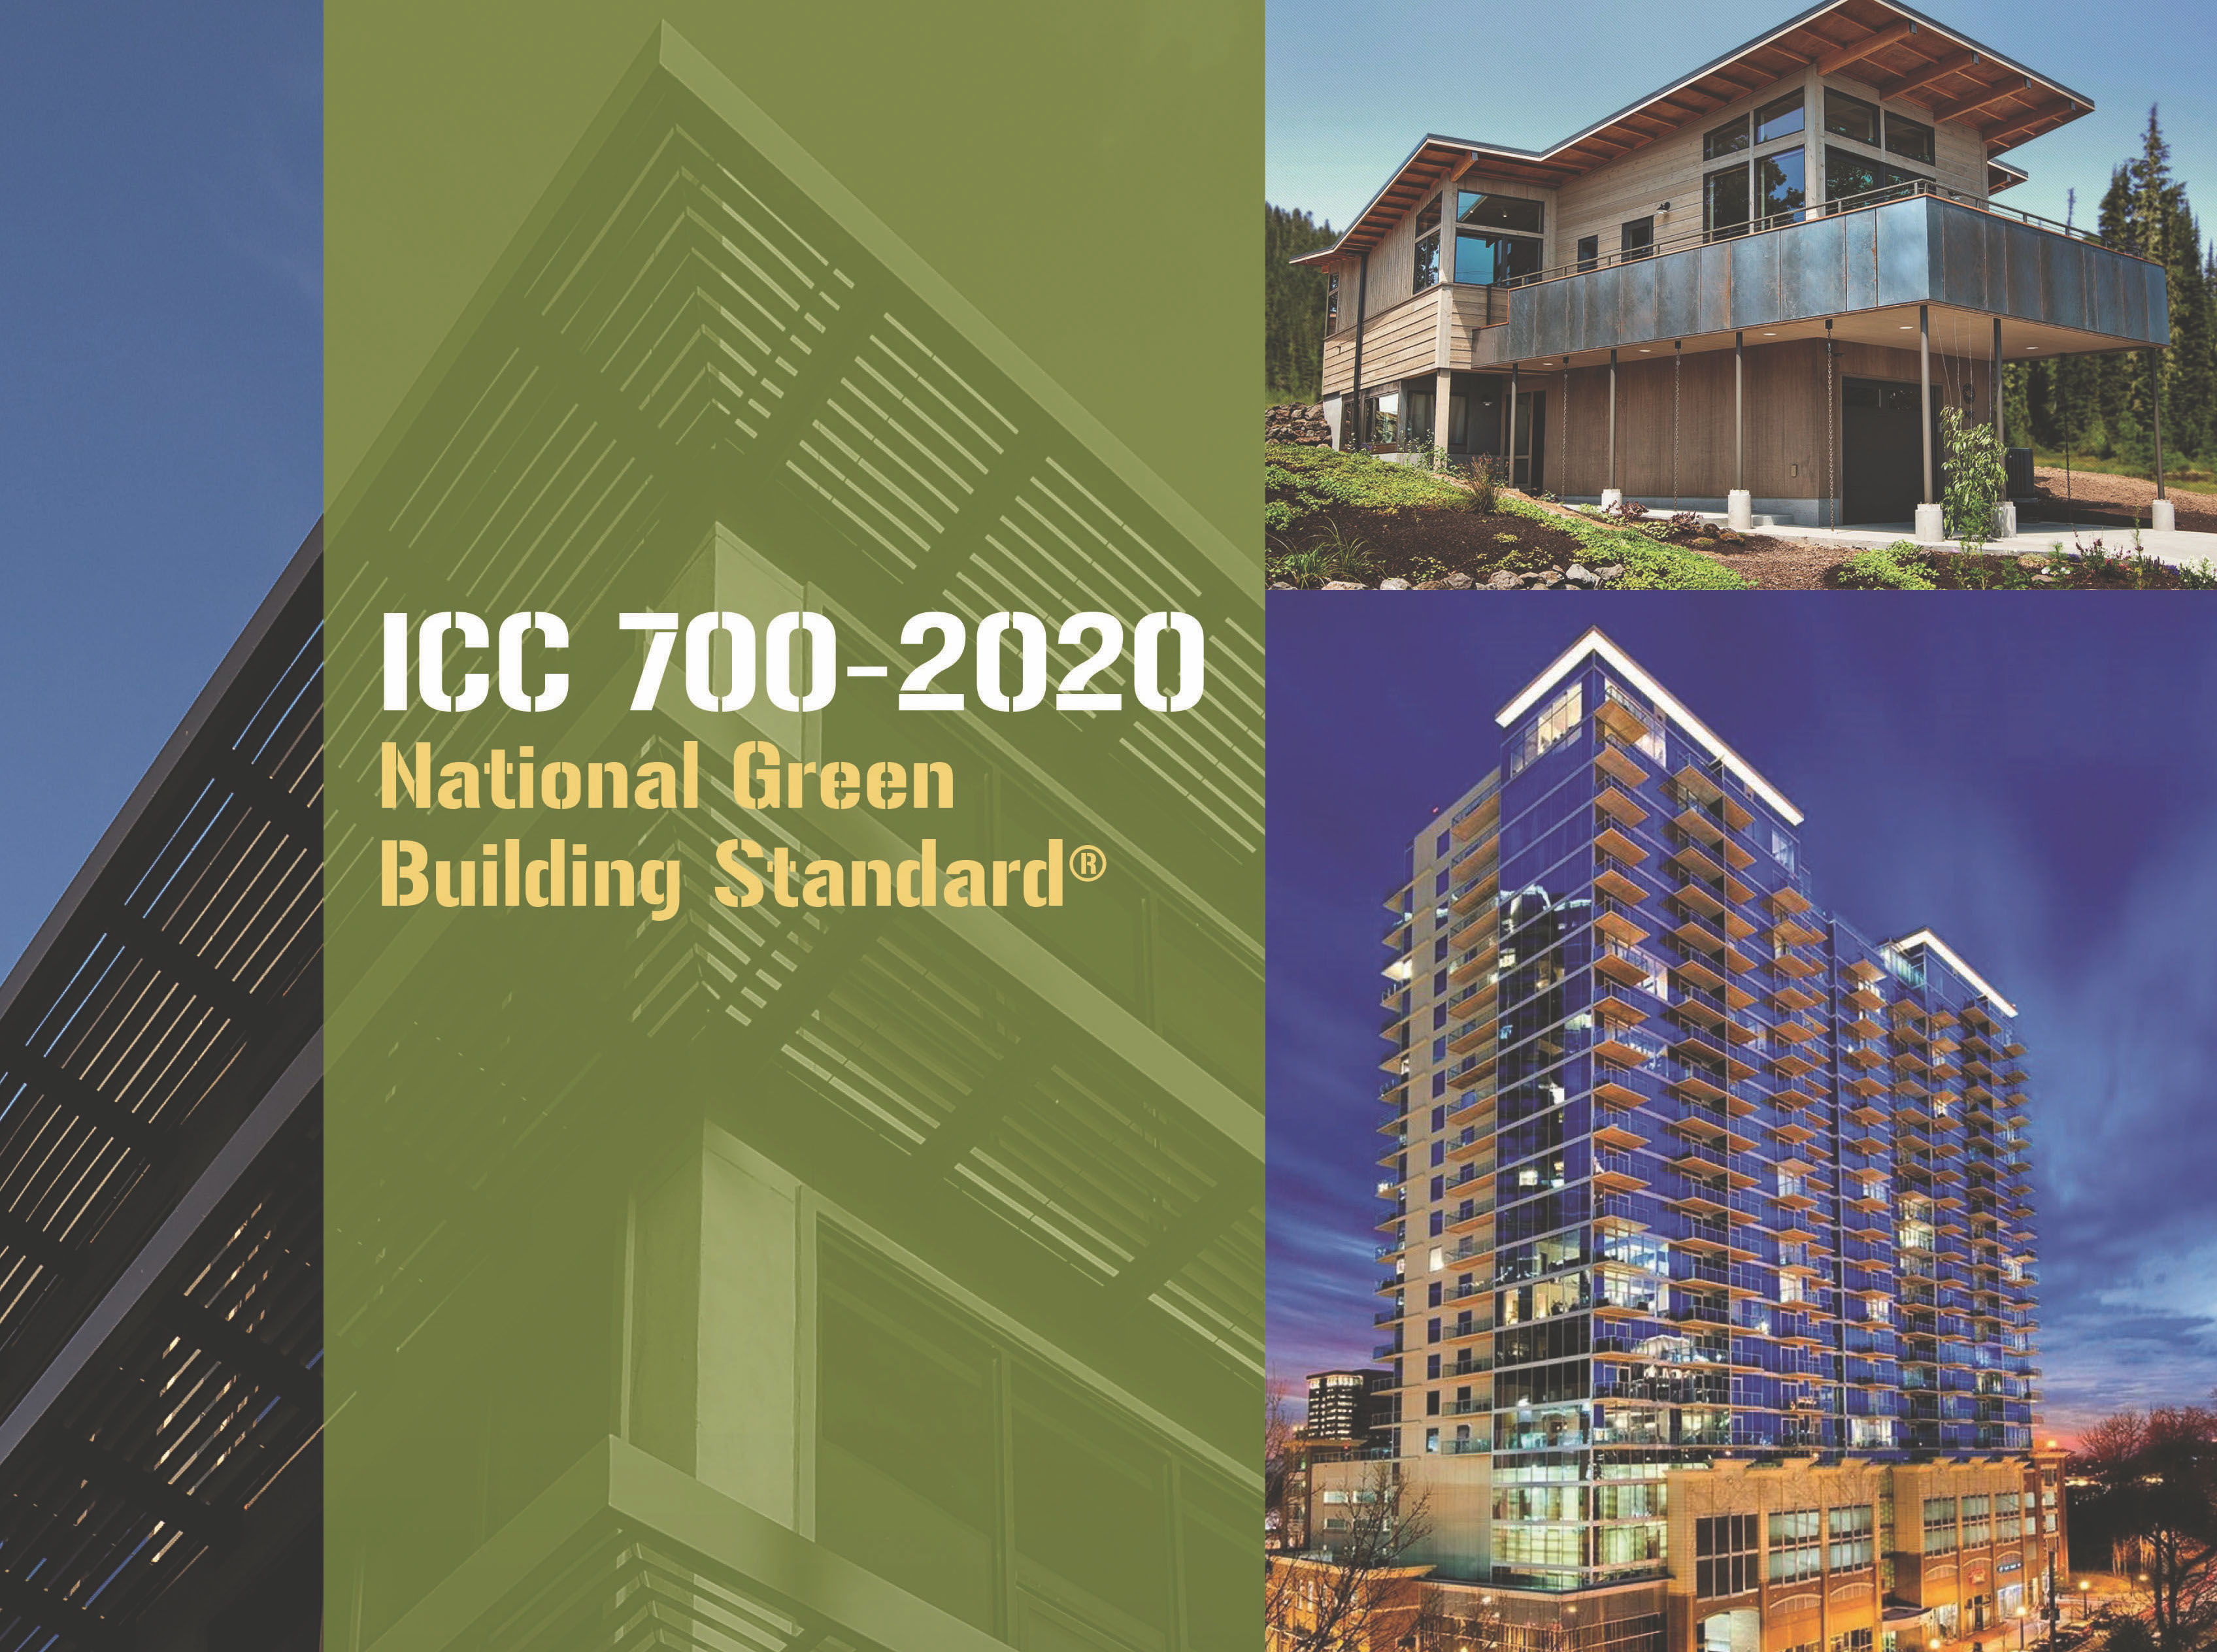 National green building standard NAHB